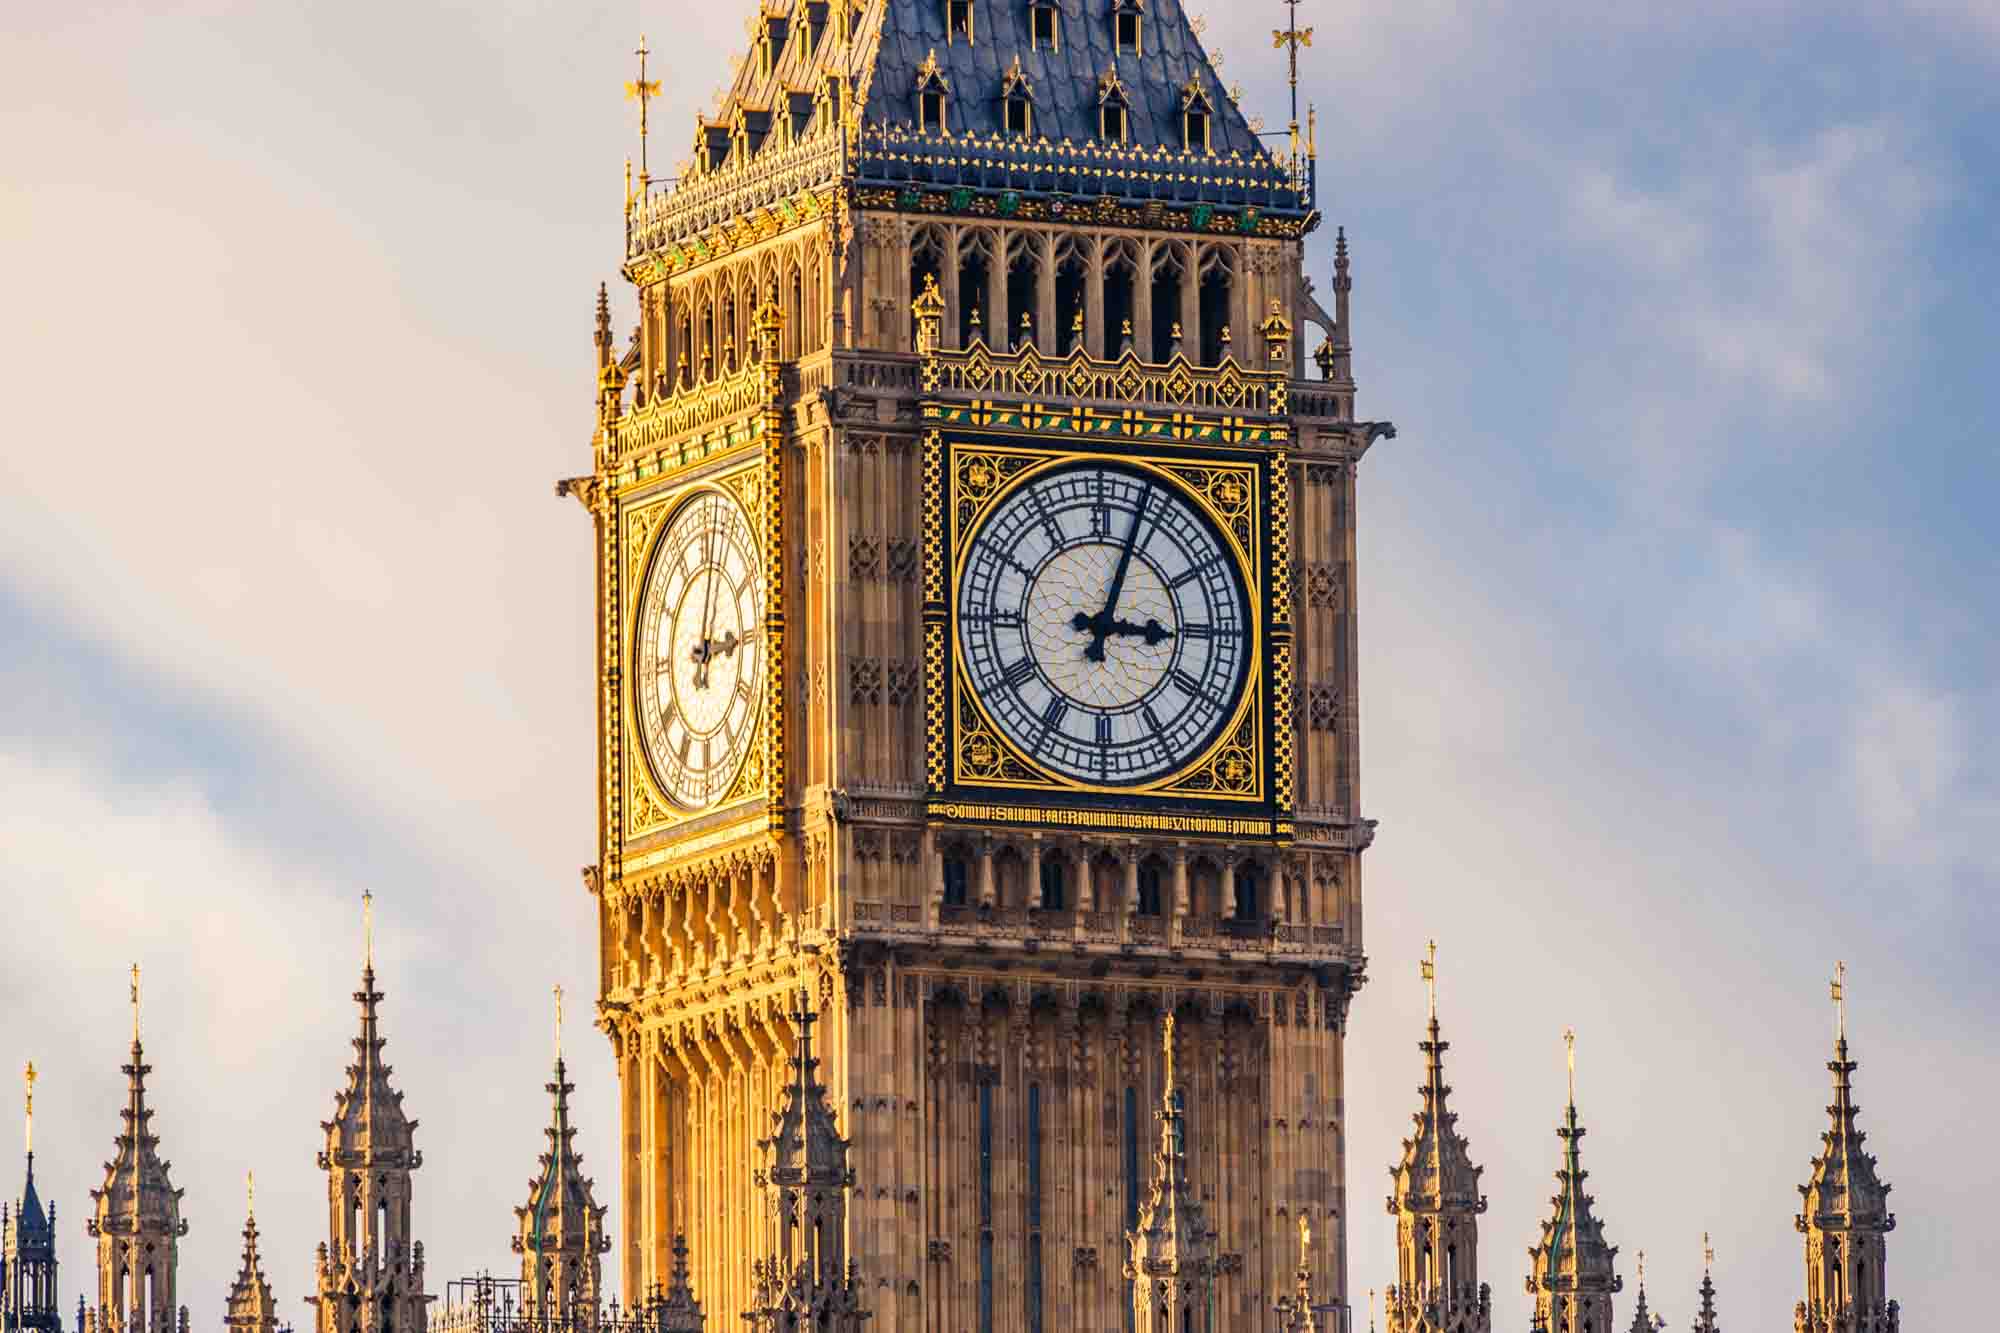 Big Ben clock, a landmark of London